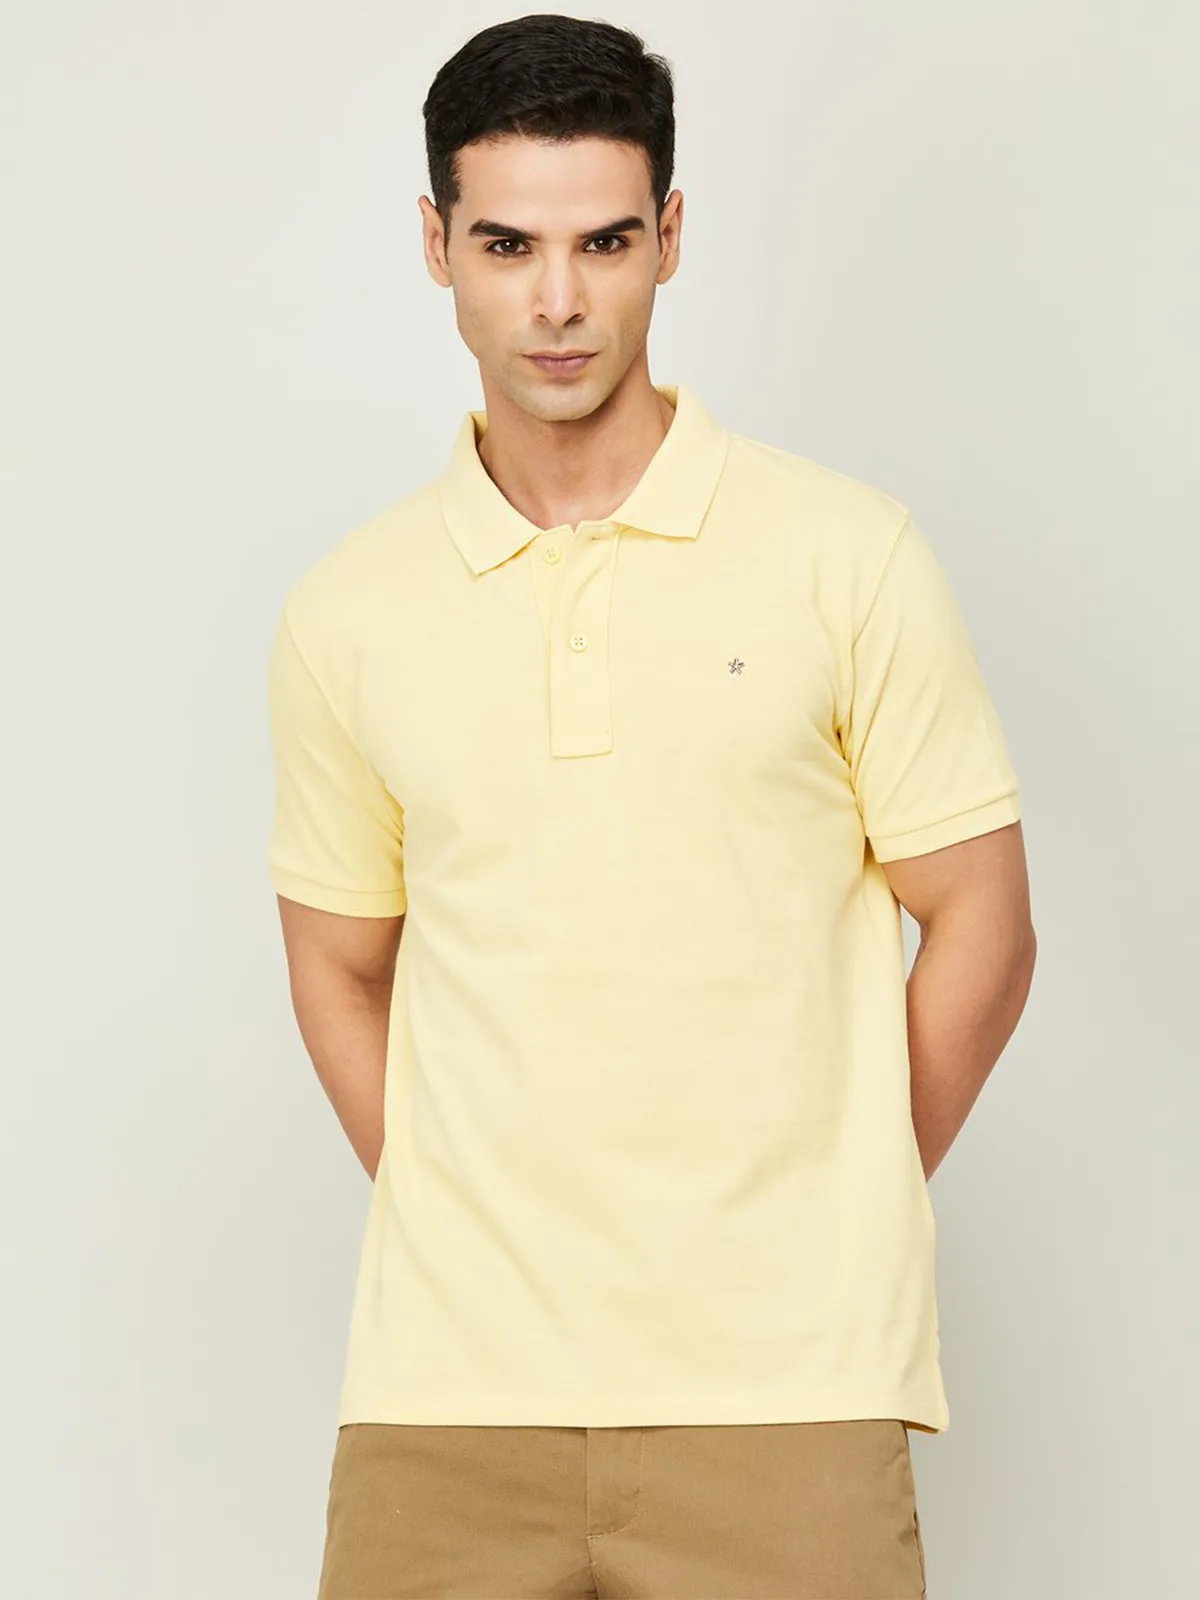 Celio light yellow plain t shirt